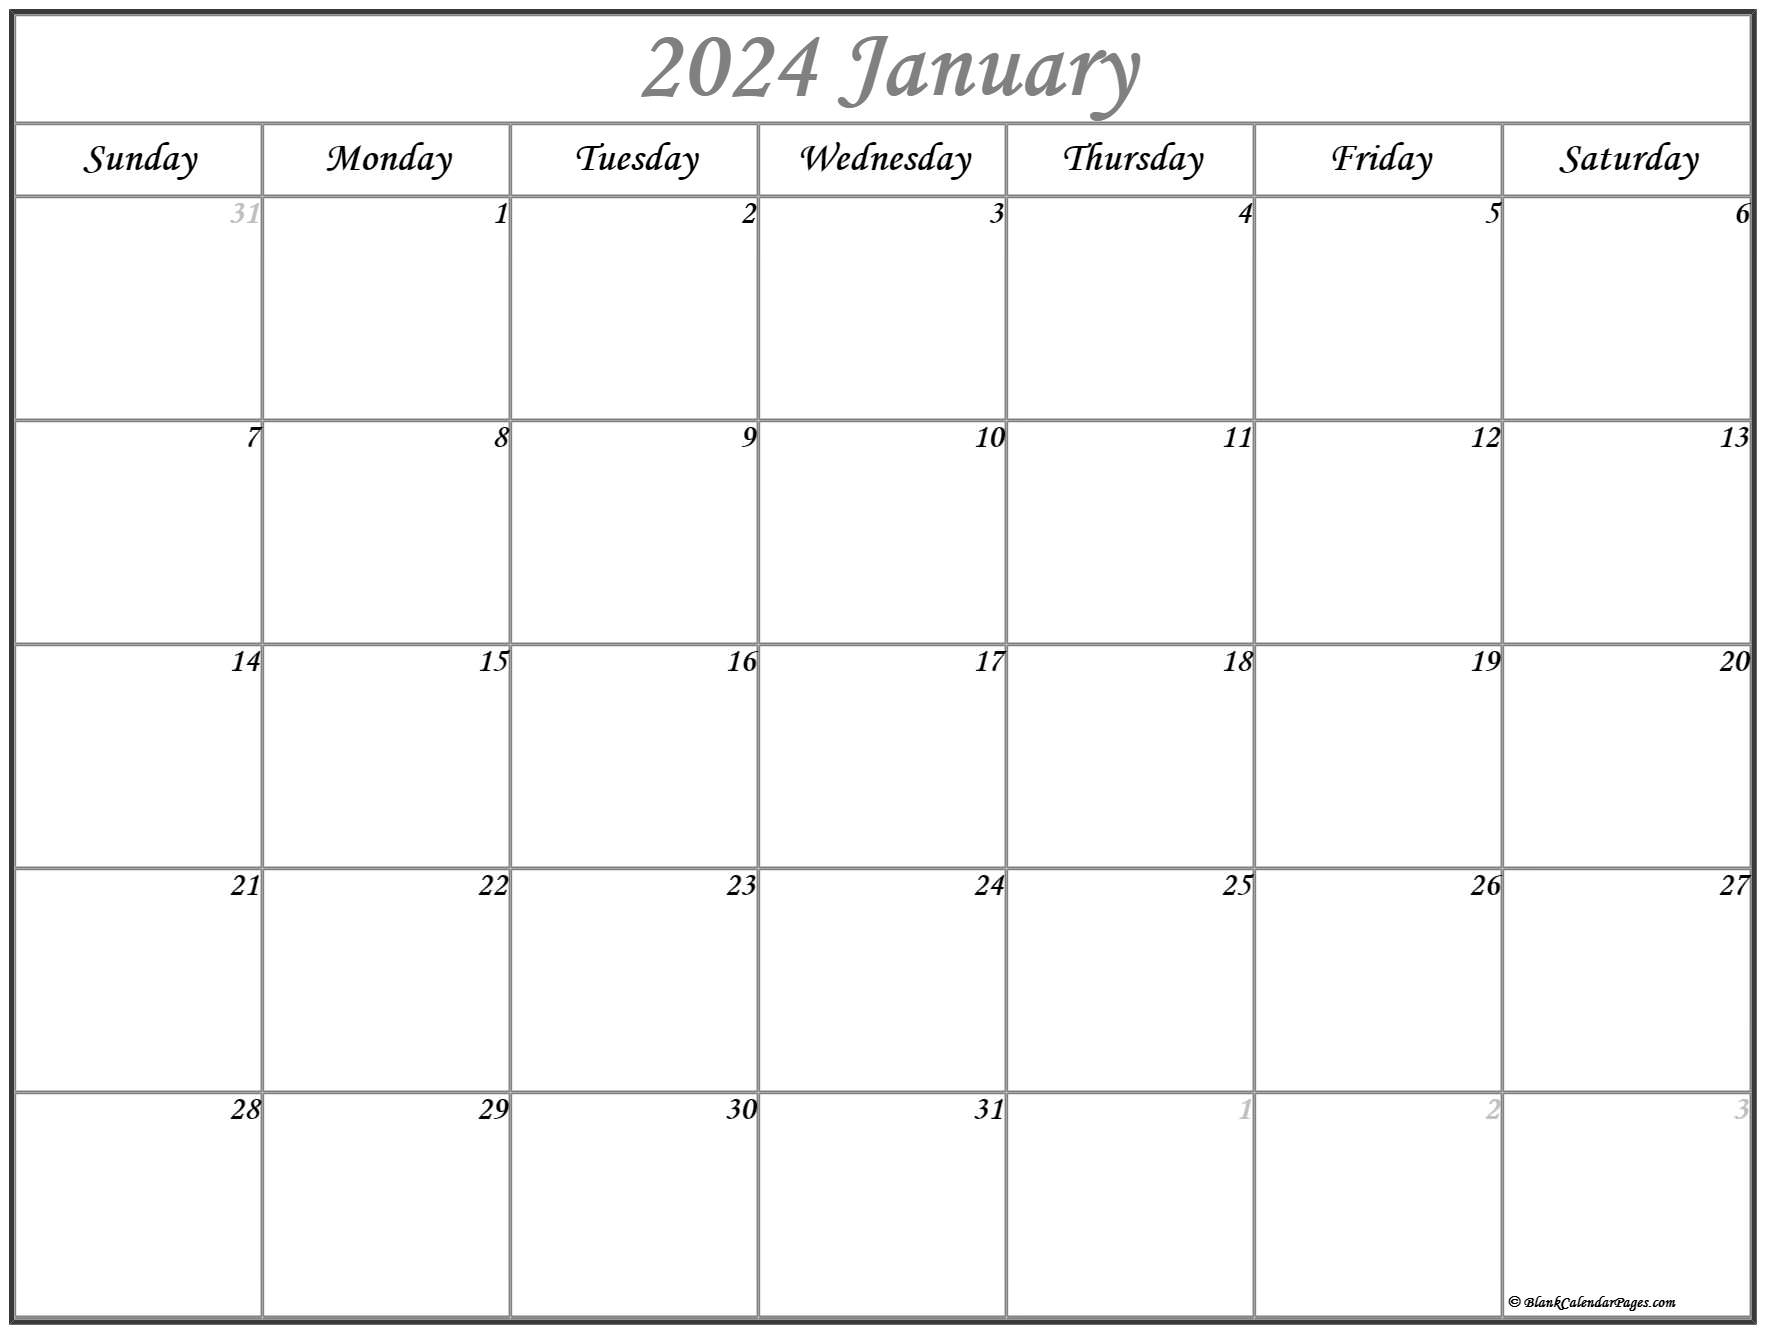 2024 Monthly Calendar Pdf Free Printable Templates 2024 Monthly - Free Printable 2024 Monthly Calendar And Weekly Planner